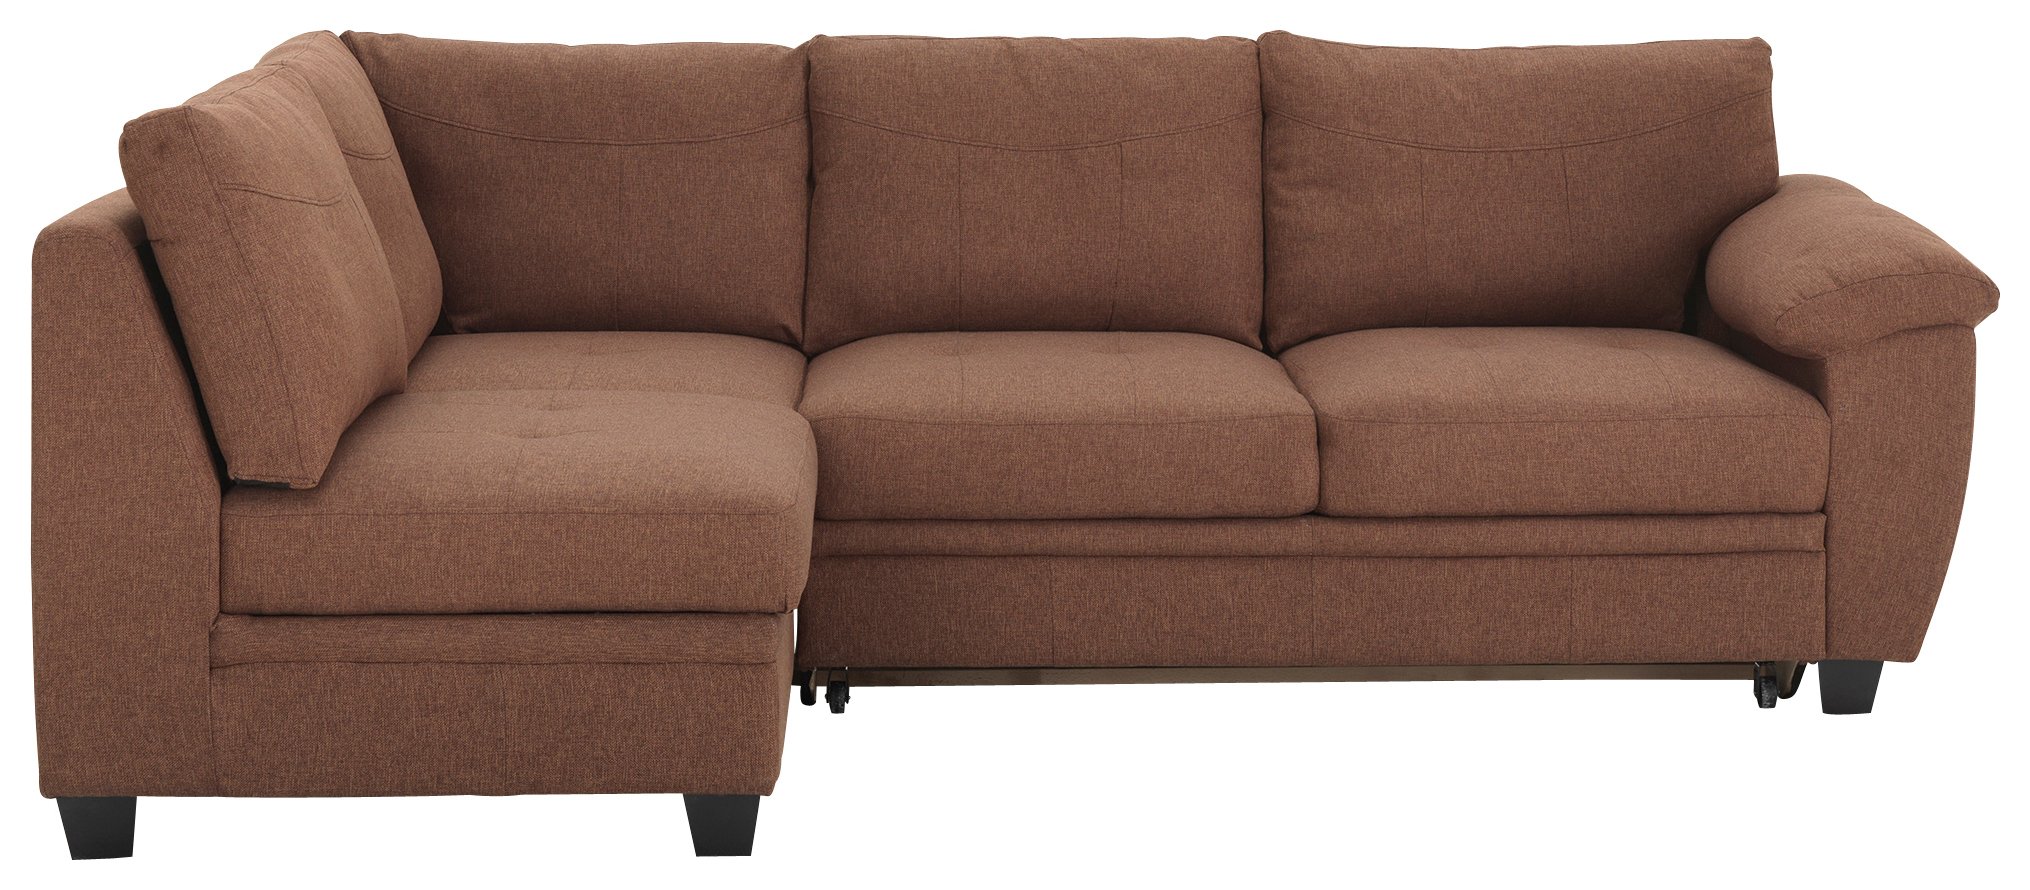 argos salisbury sofa bed